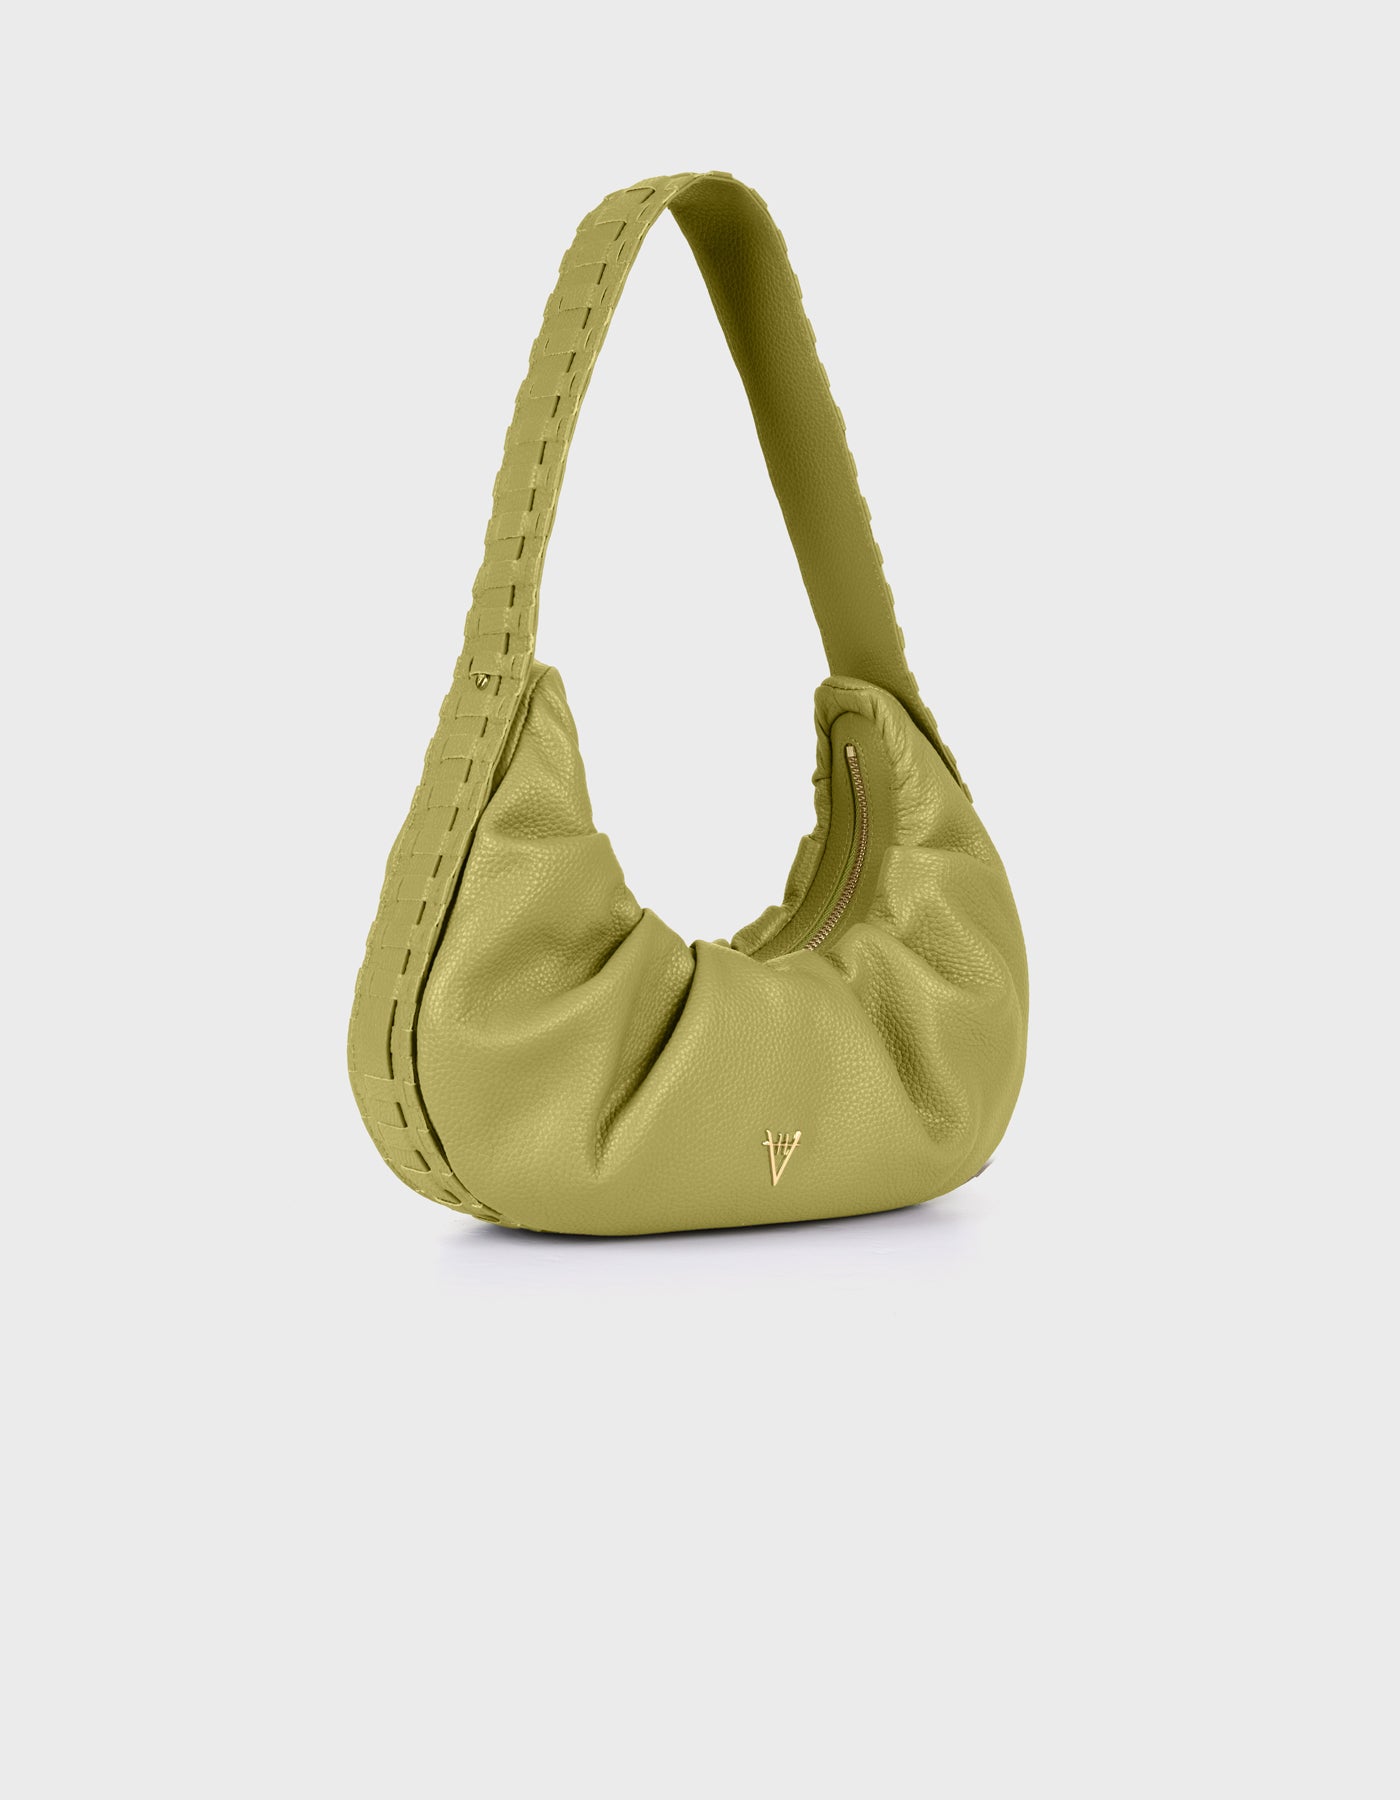 HiVa Atelier | Croissant Bag Olive | Beautiful and Versatile